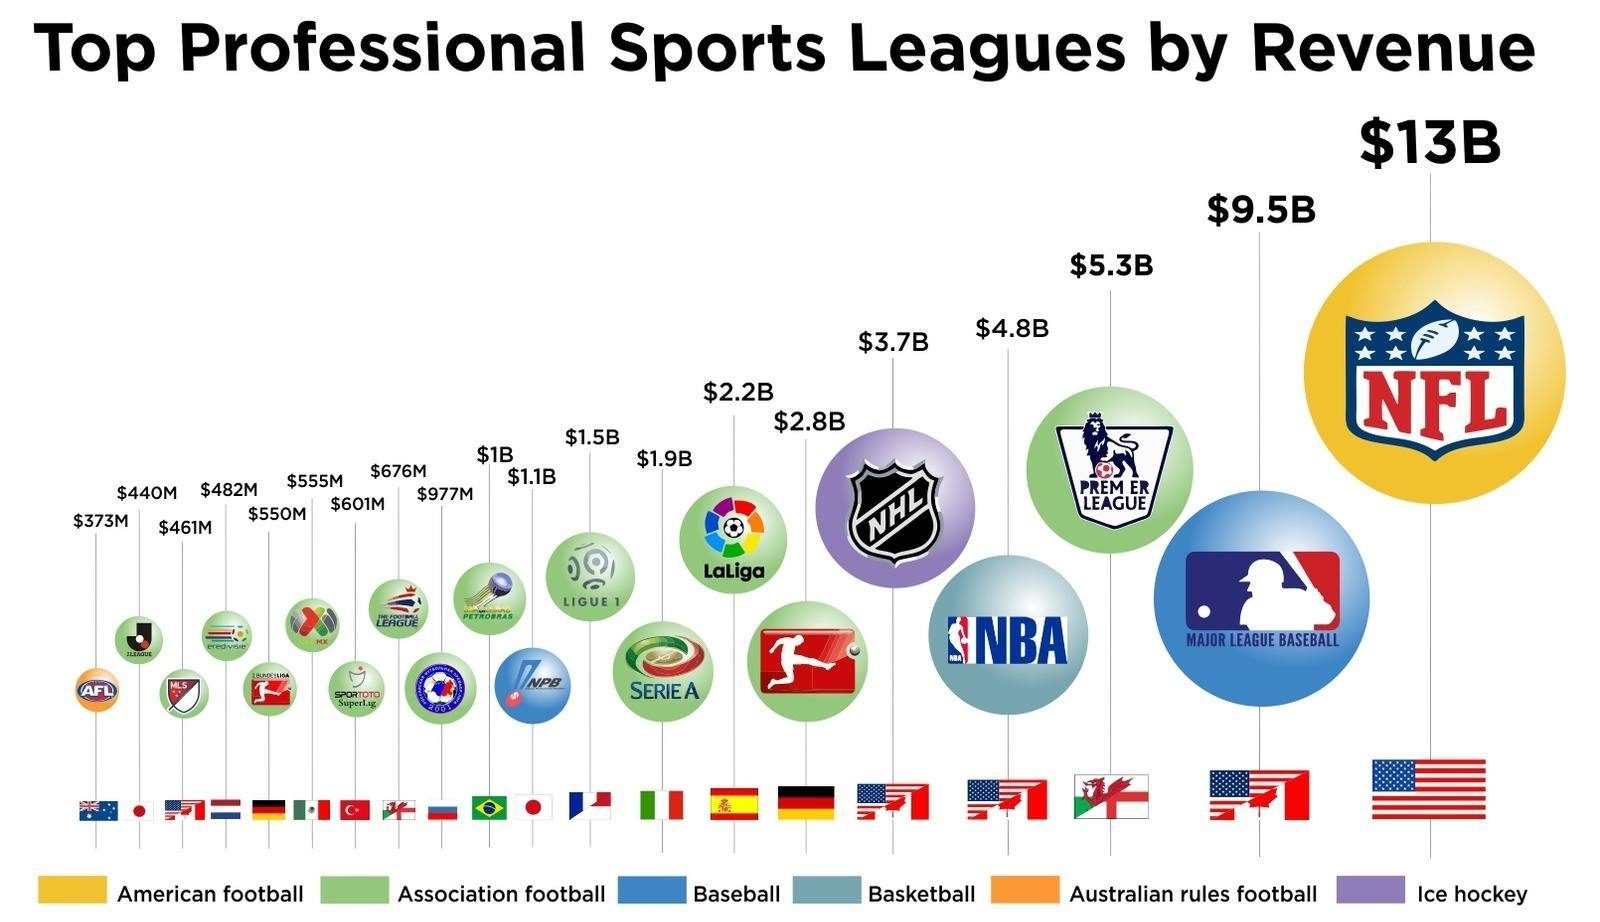 Top Professional Sports Leagues by Revenue